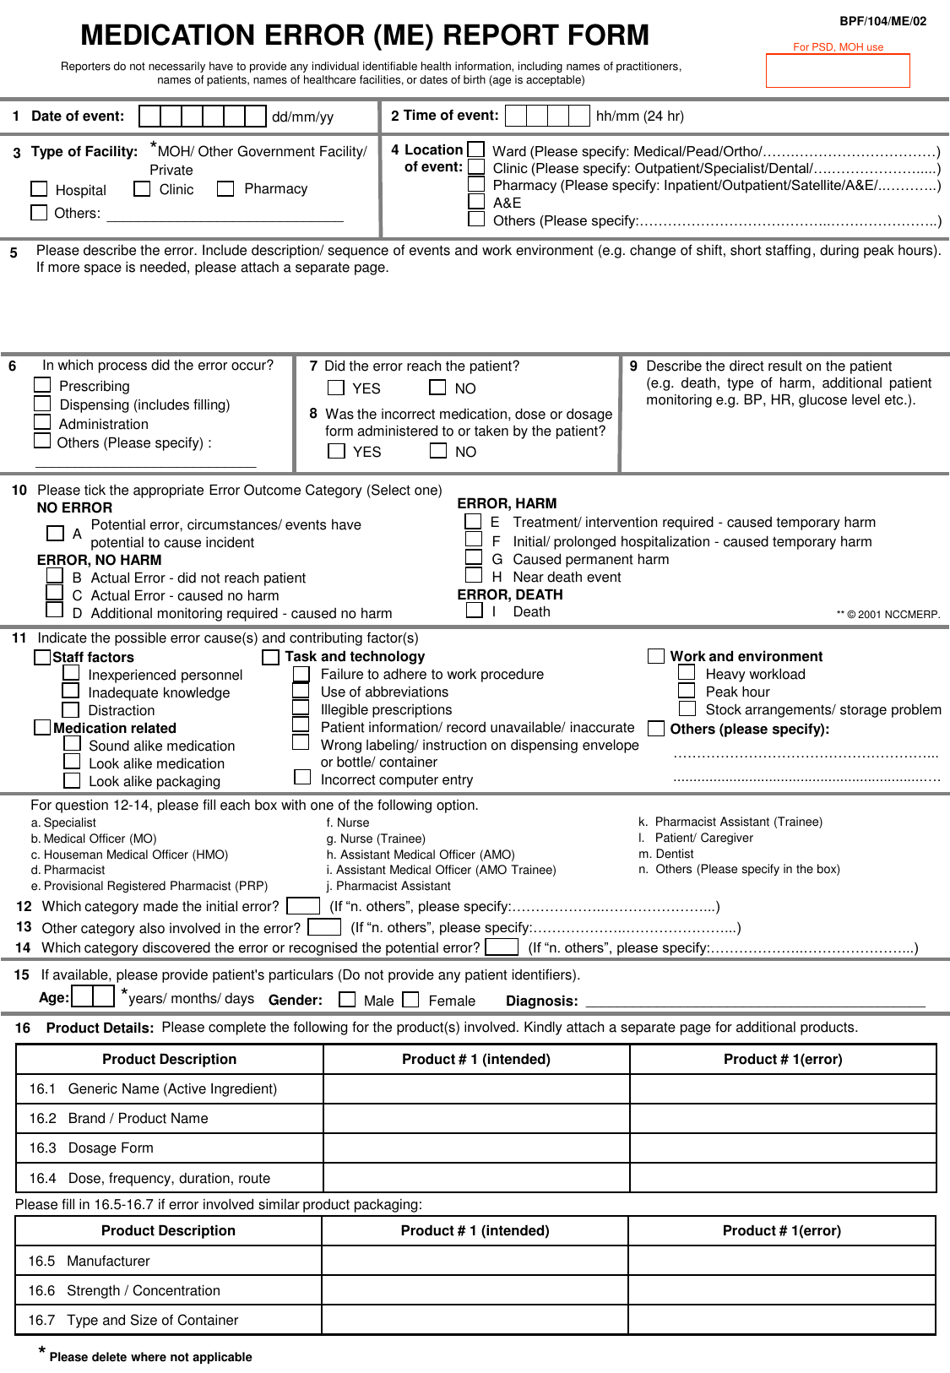 Form BPF / 104 / ME / 02 Medication Error (Me) Report Form - Malaysia, Page 1